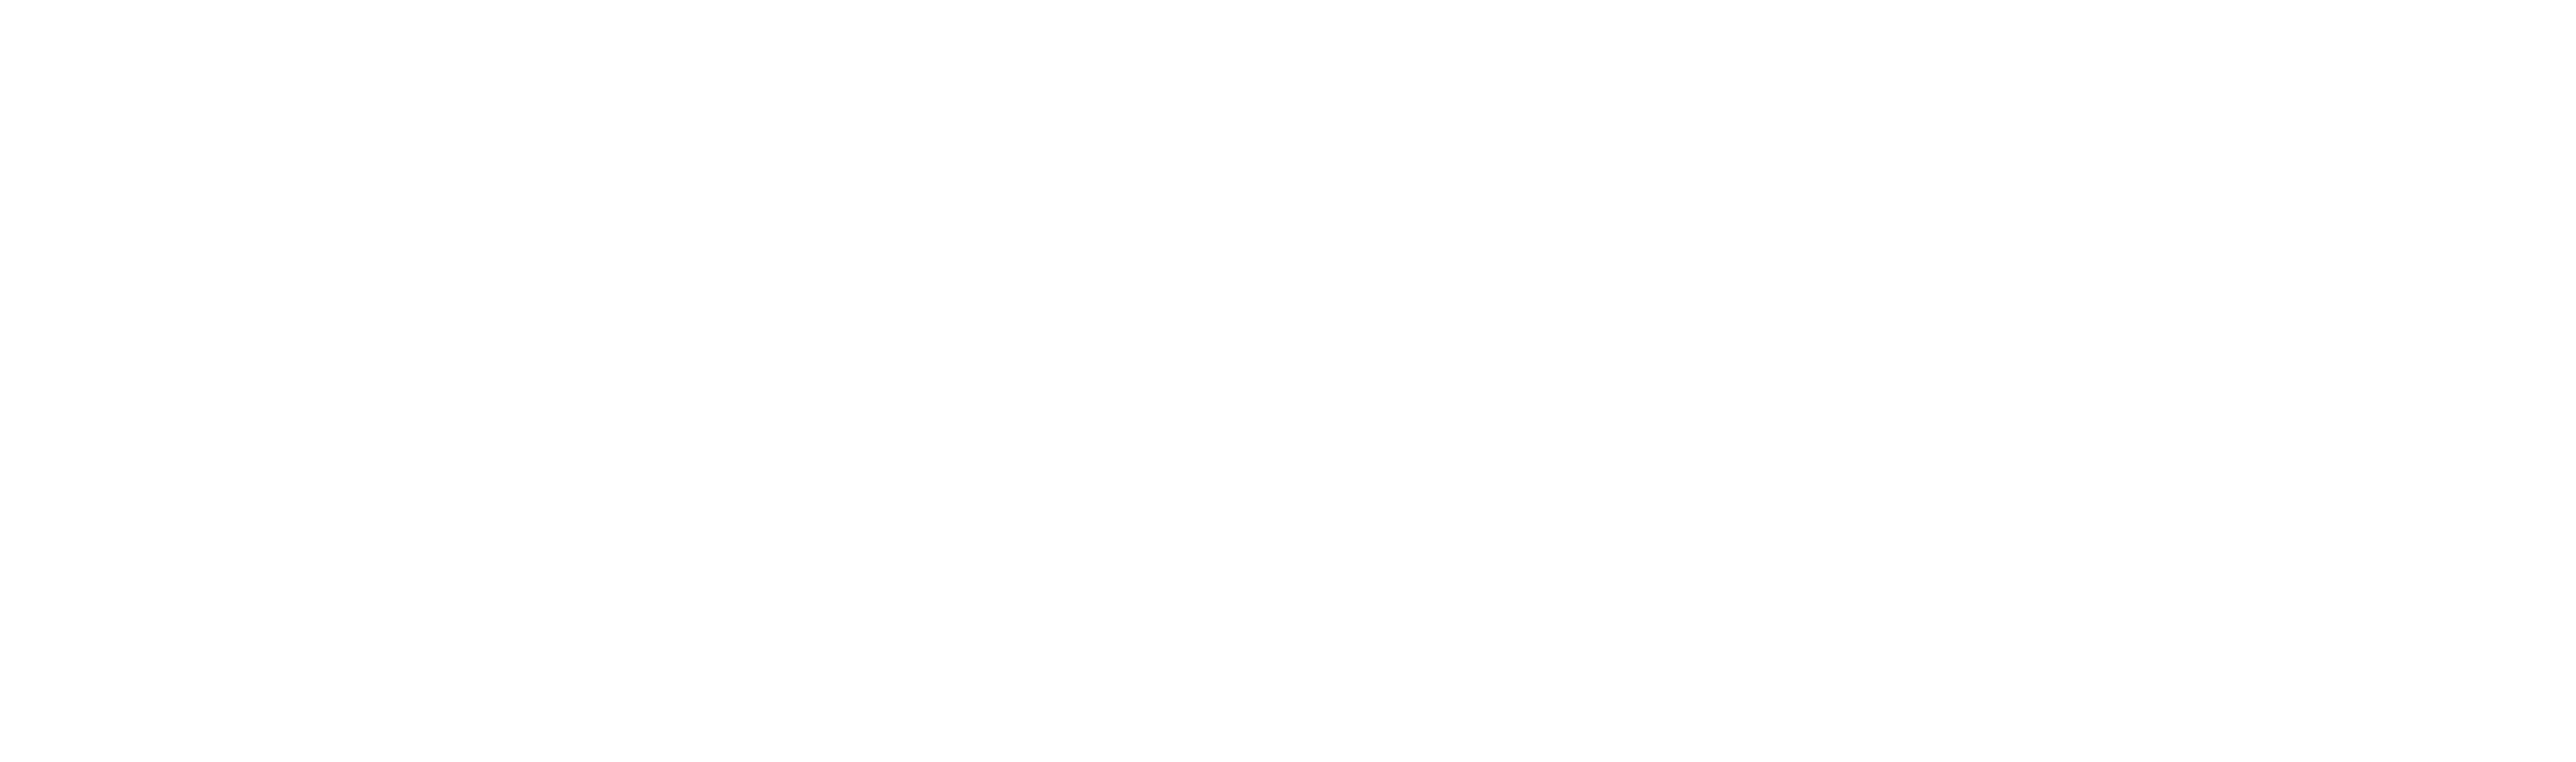 Bobsled_Acadia_Logo_Reversed-1